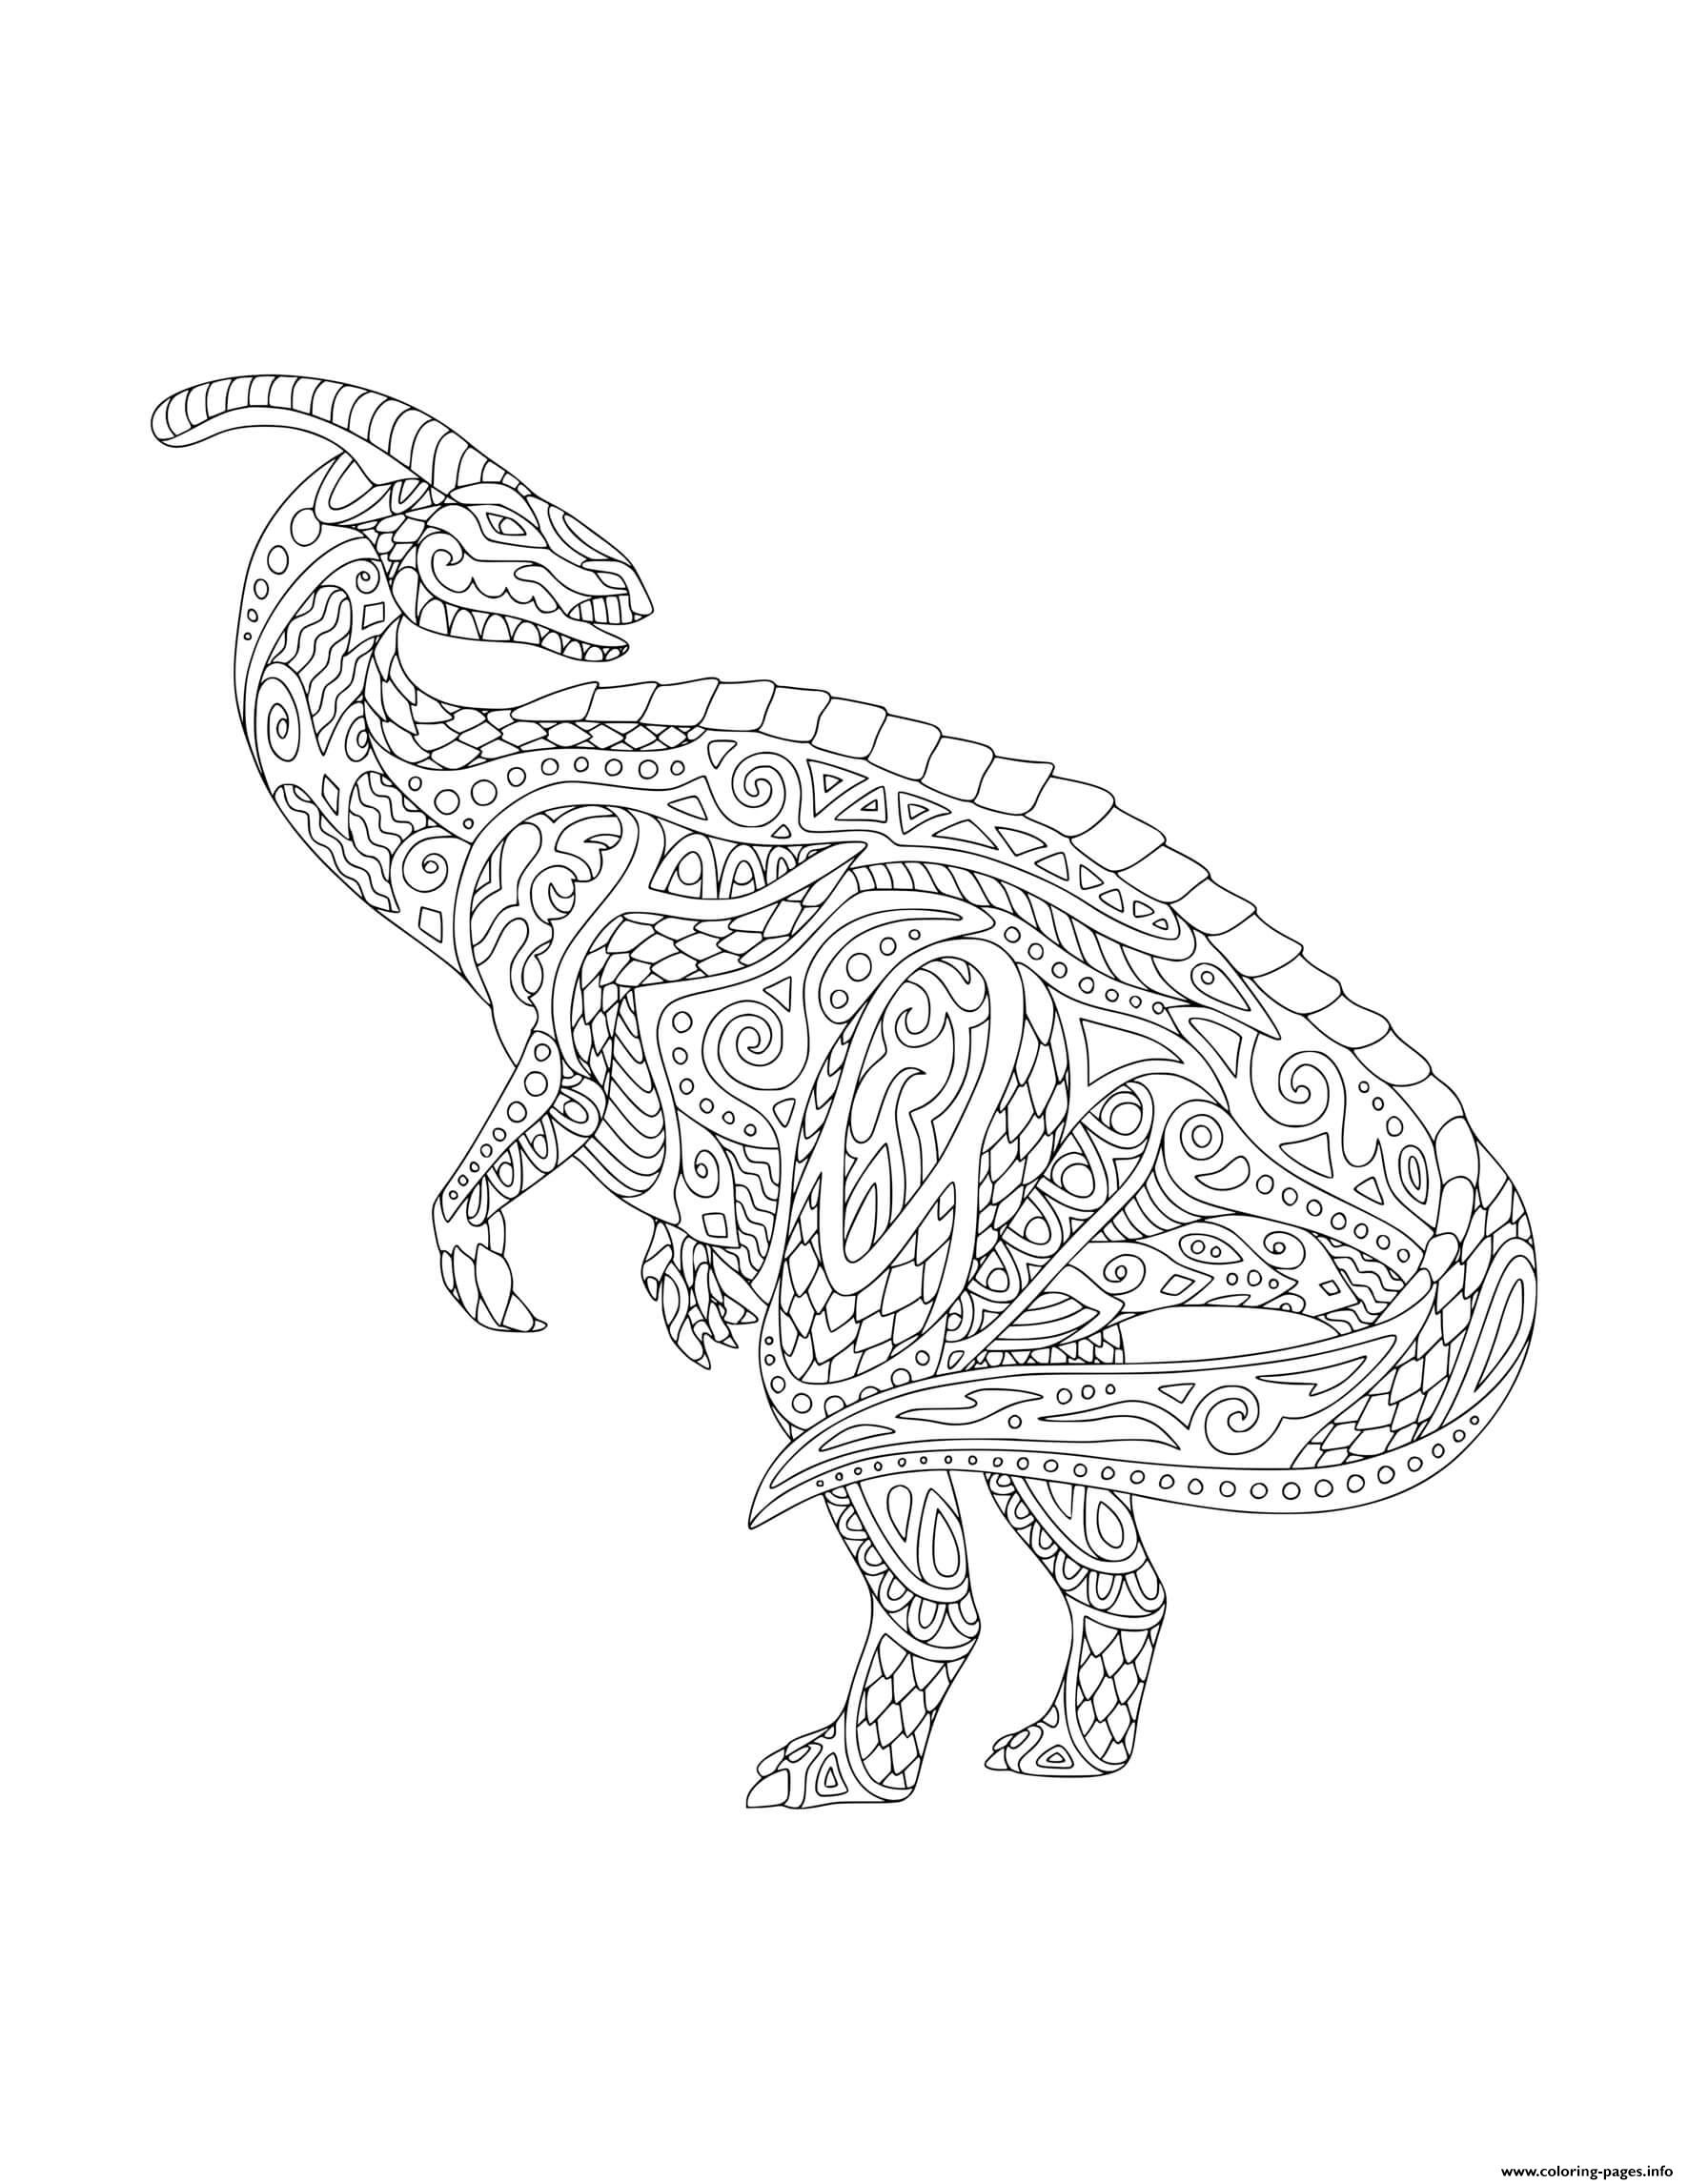 Dinosaur Parasaurolophus Doodle For Adults coloring